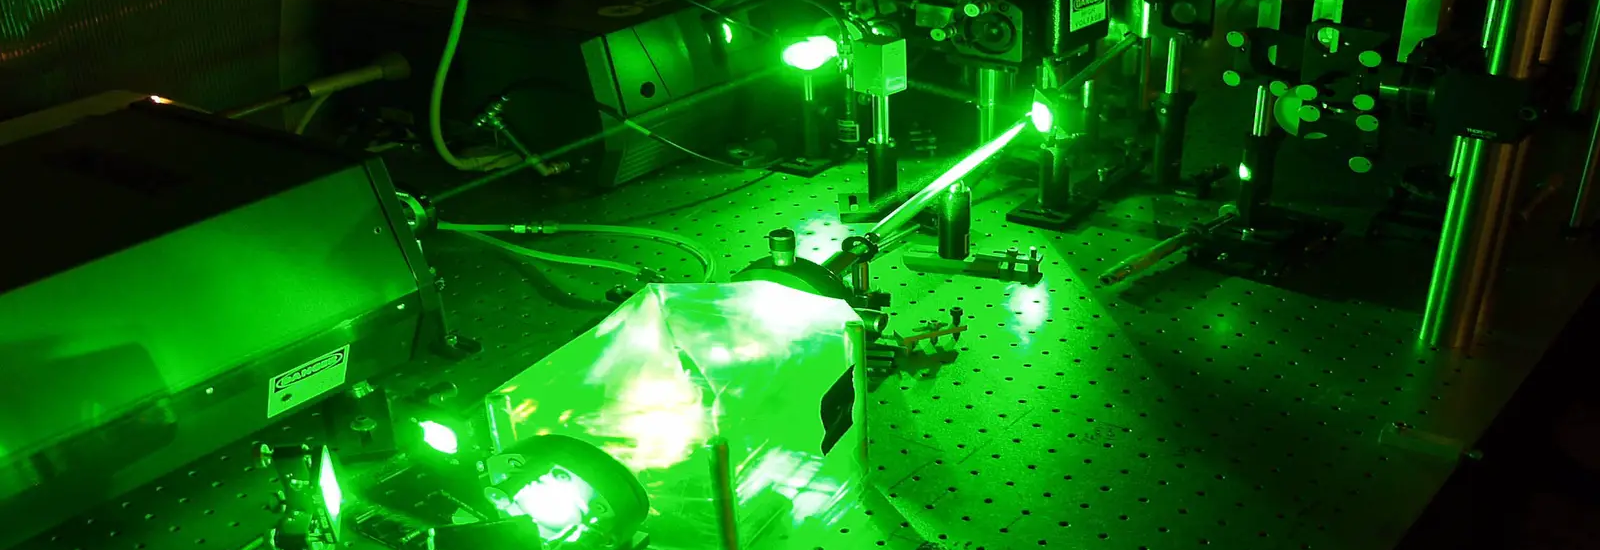 Machine in a dark room glowing bright green